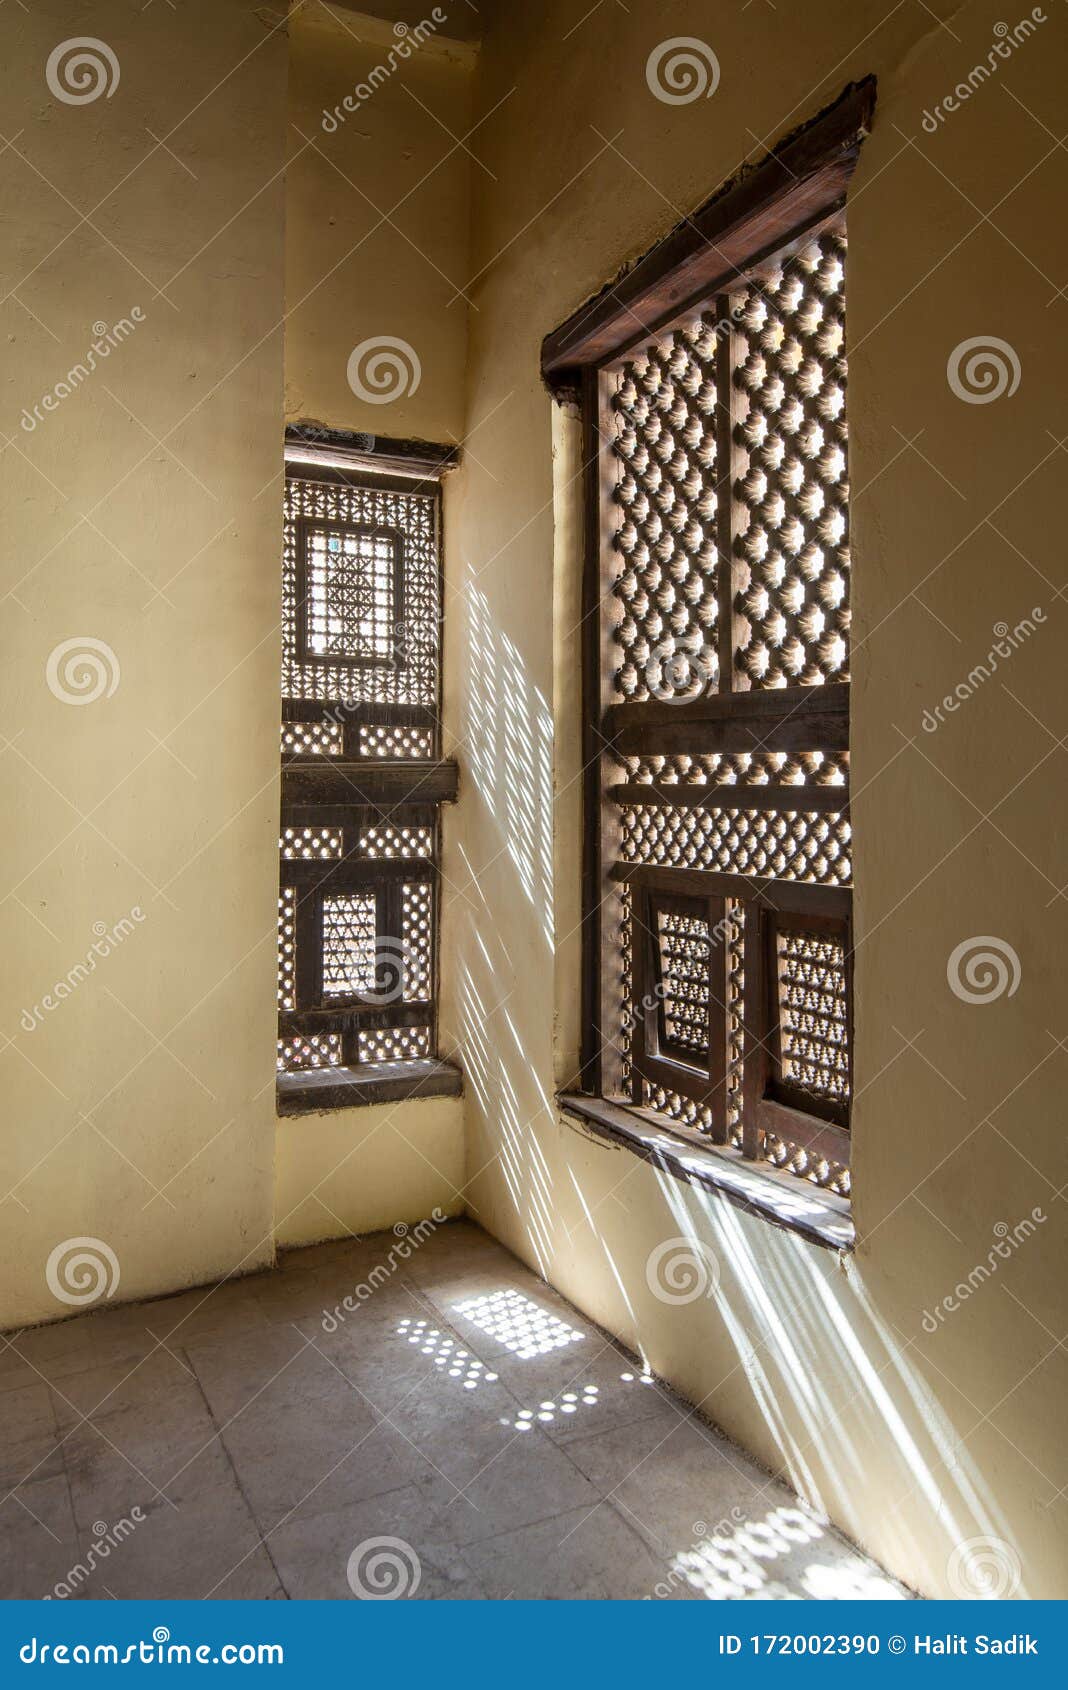 corner of two interleaved wooden ornate windows - mashrabiya - in stone wall